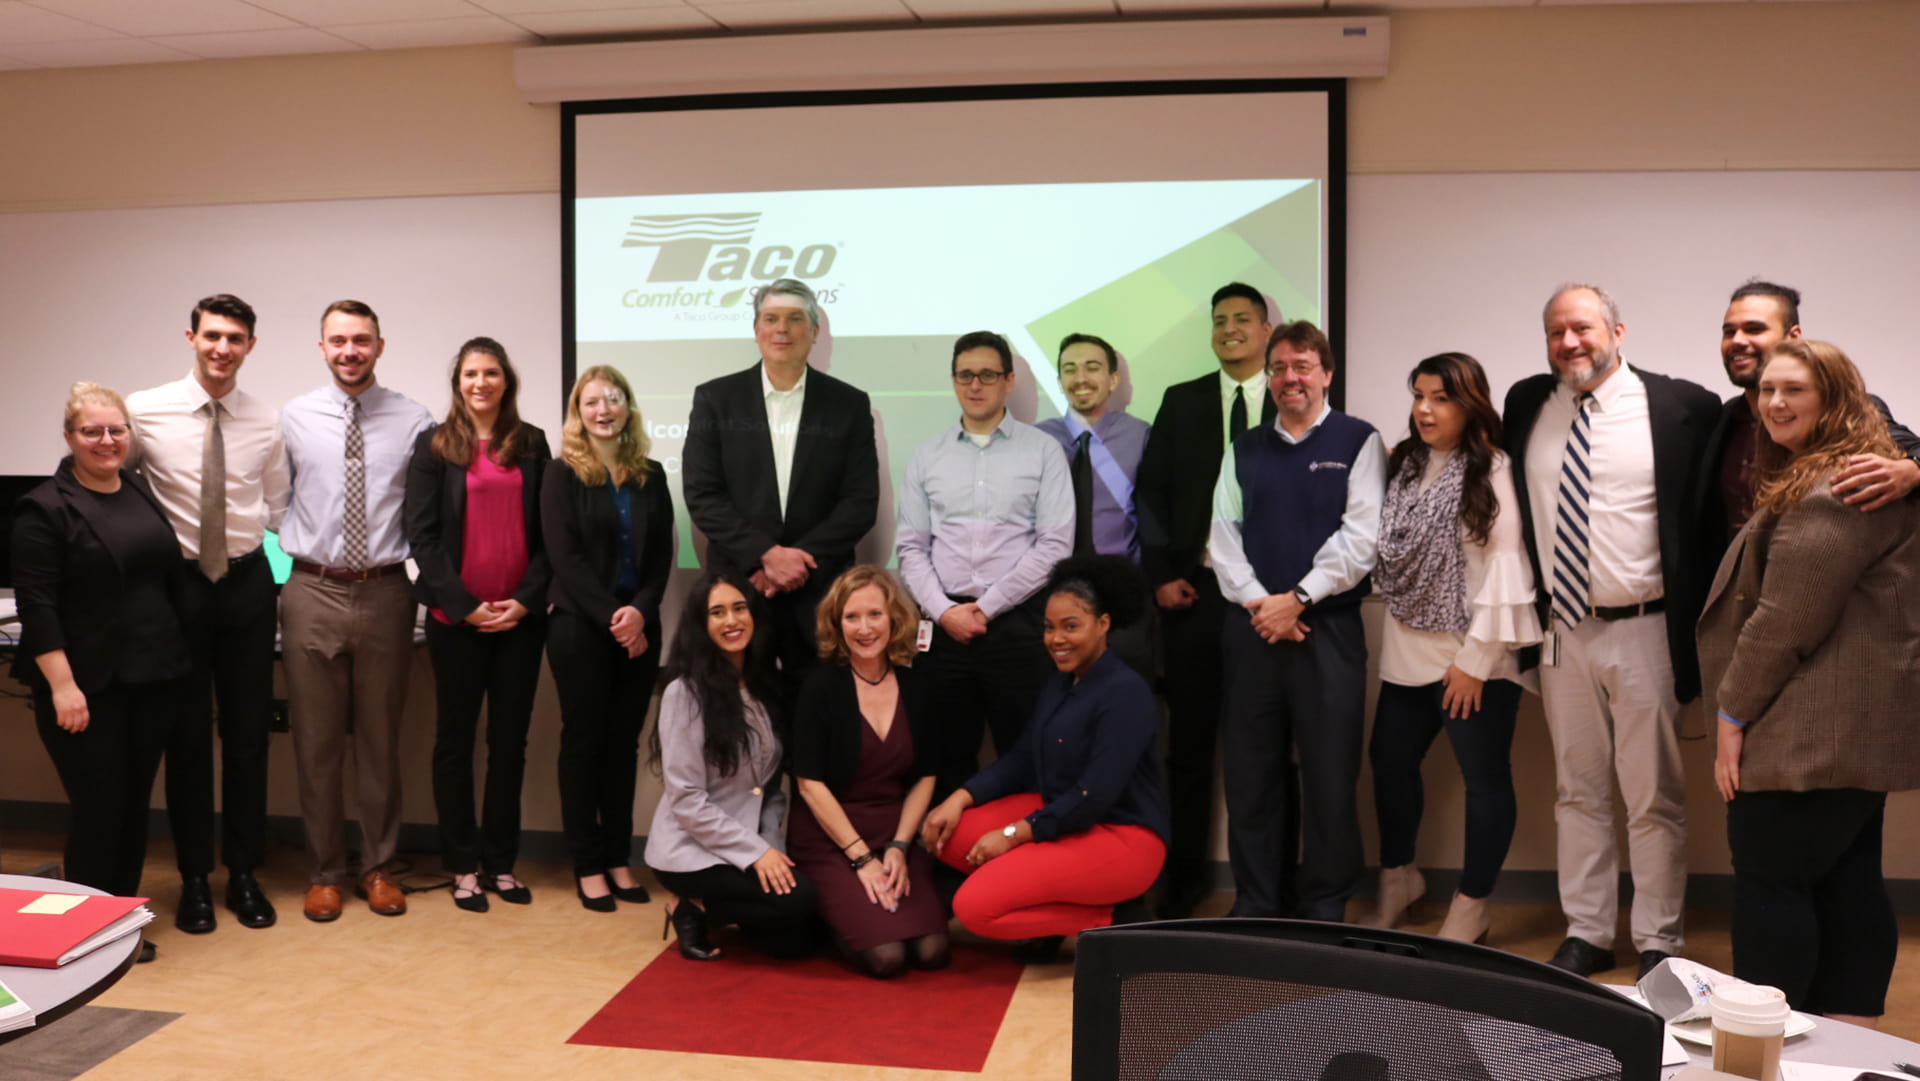 Group shot of JWU marketing students and Taco executives